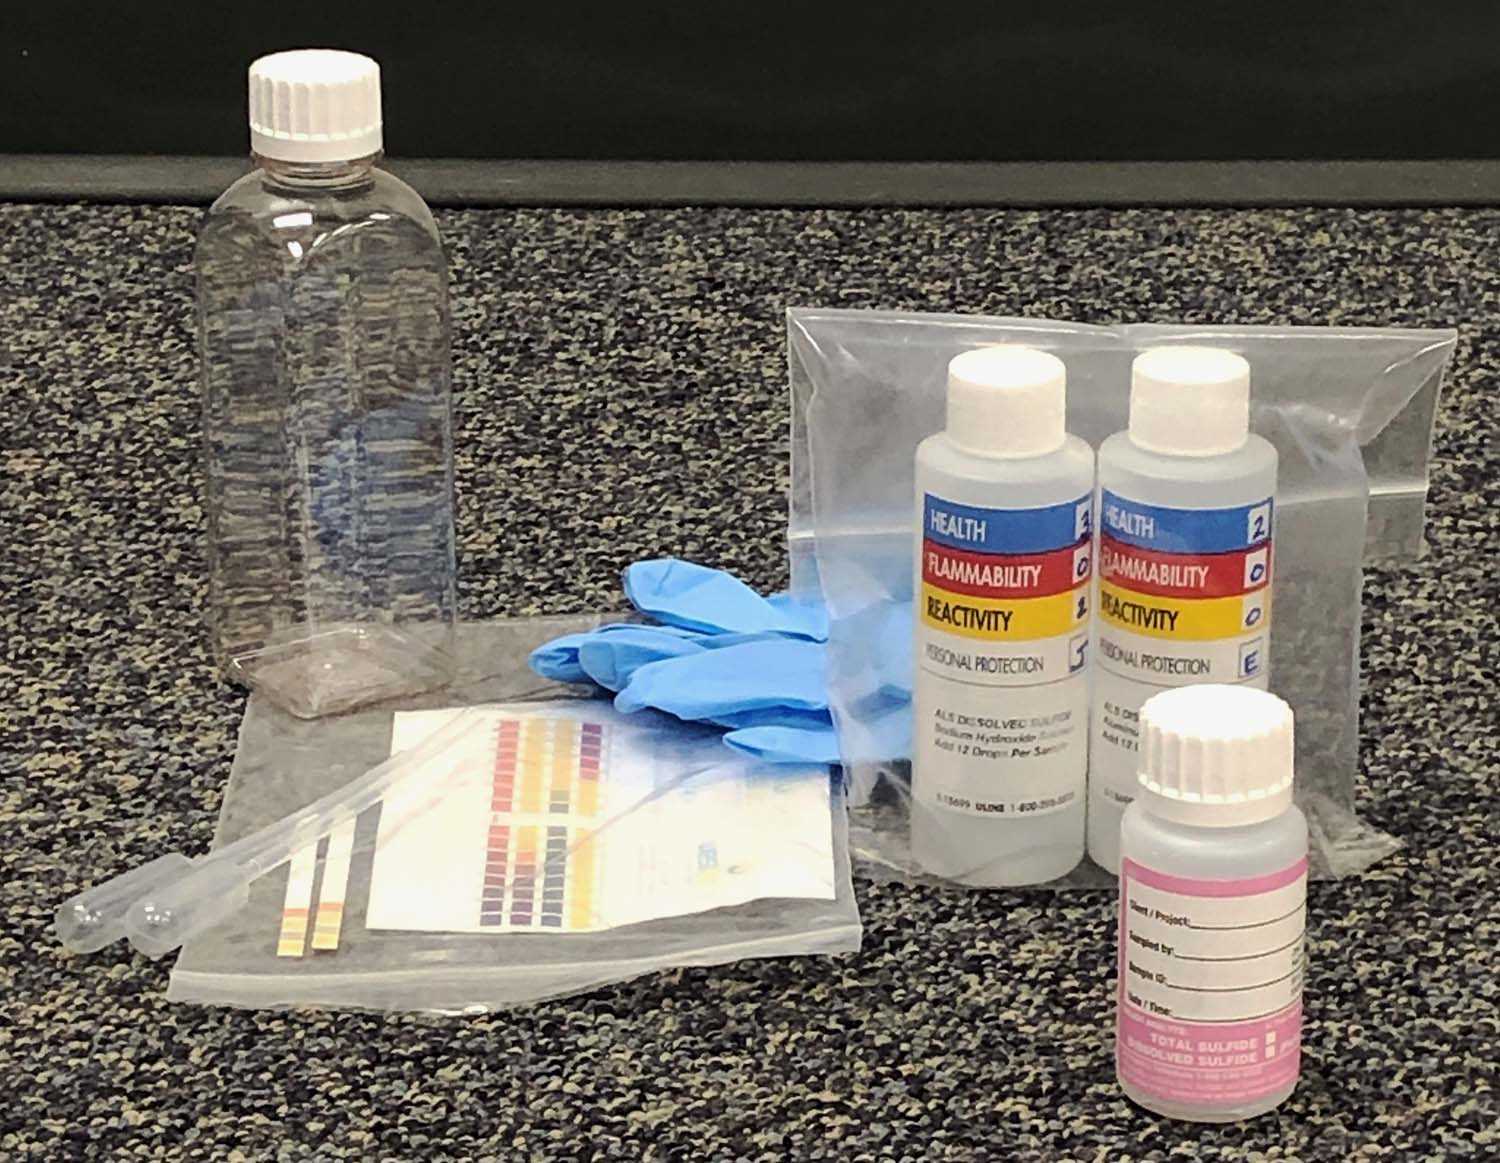 Flocculation kit and sample bottle (pink)